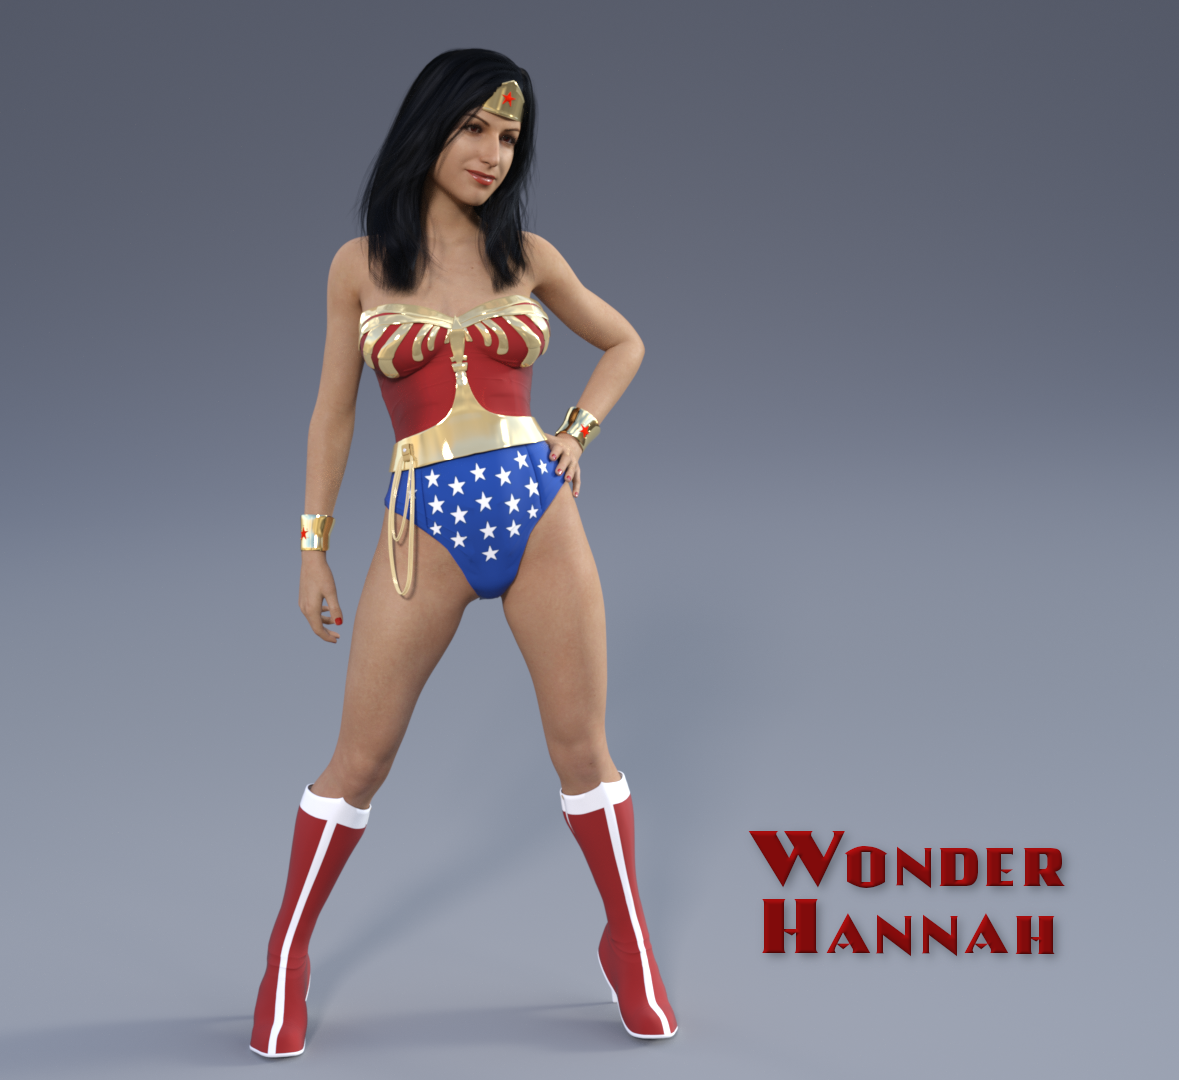 Hannah Perez as Wonder Hannah.png